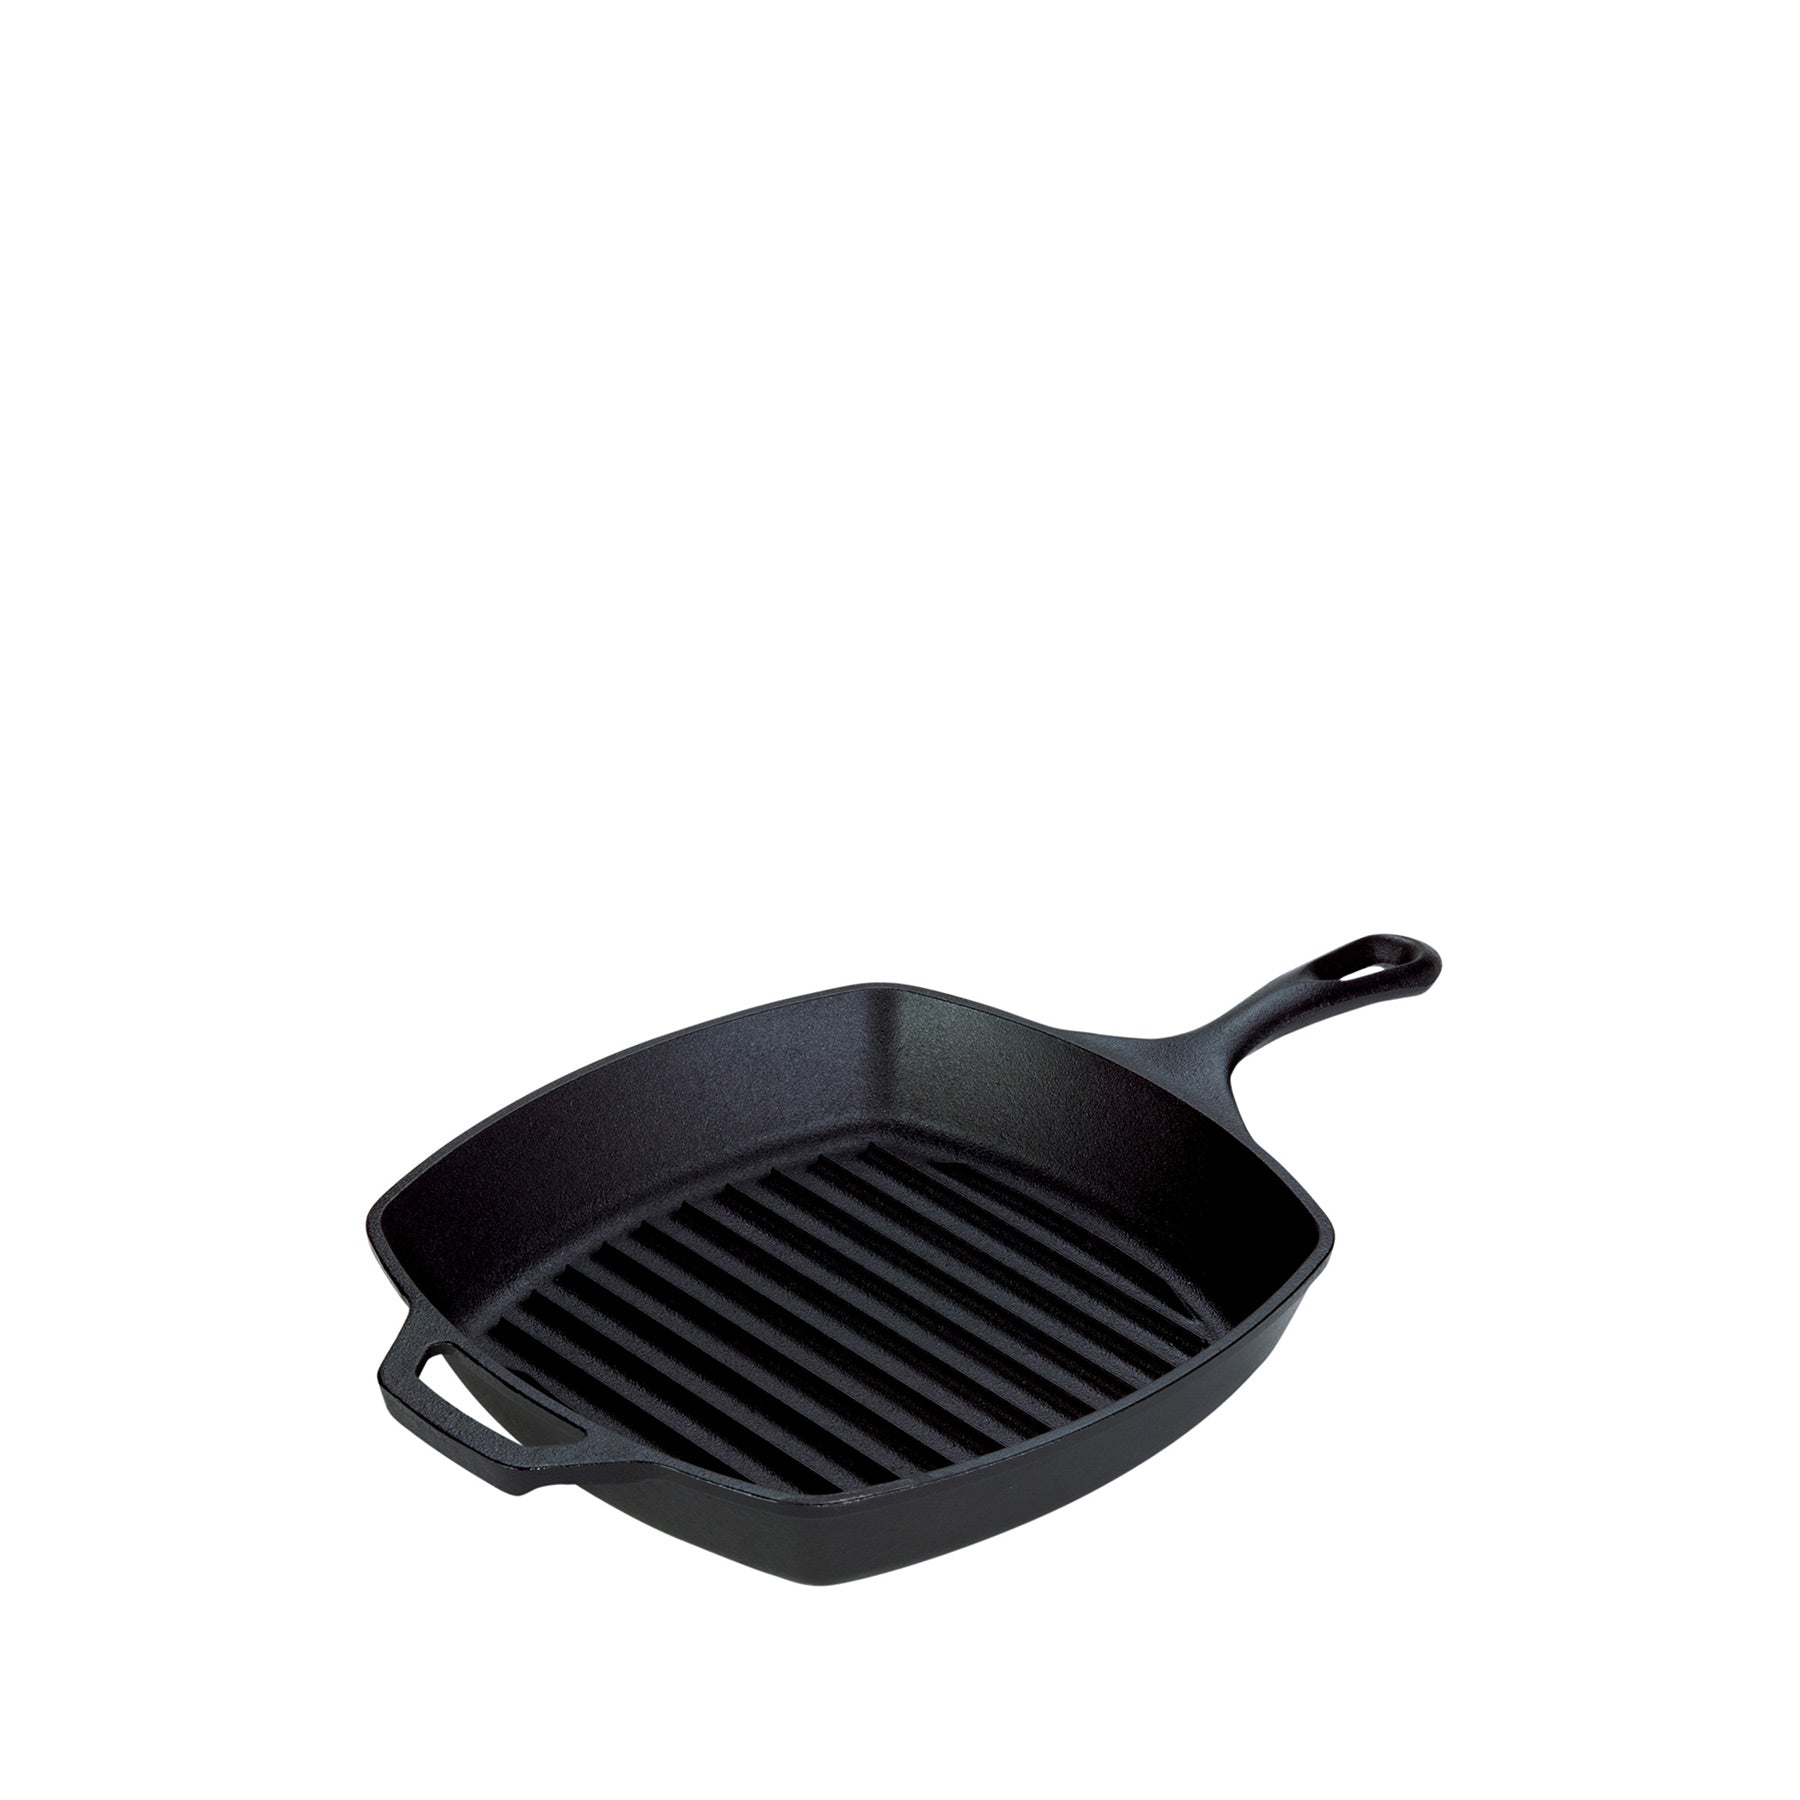 Lodge Cast Iron 10.5 inch Square Grill Pan, Black